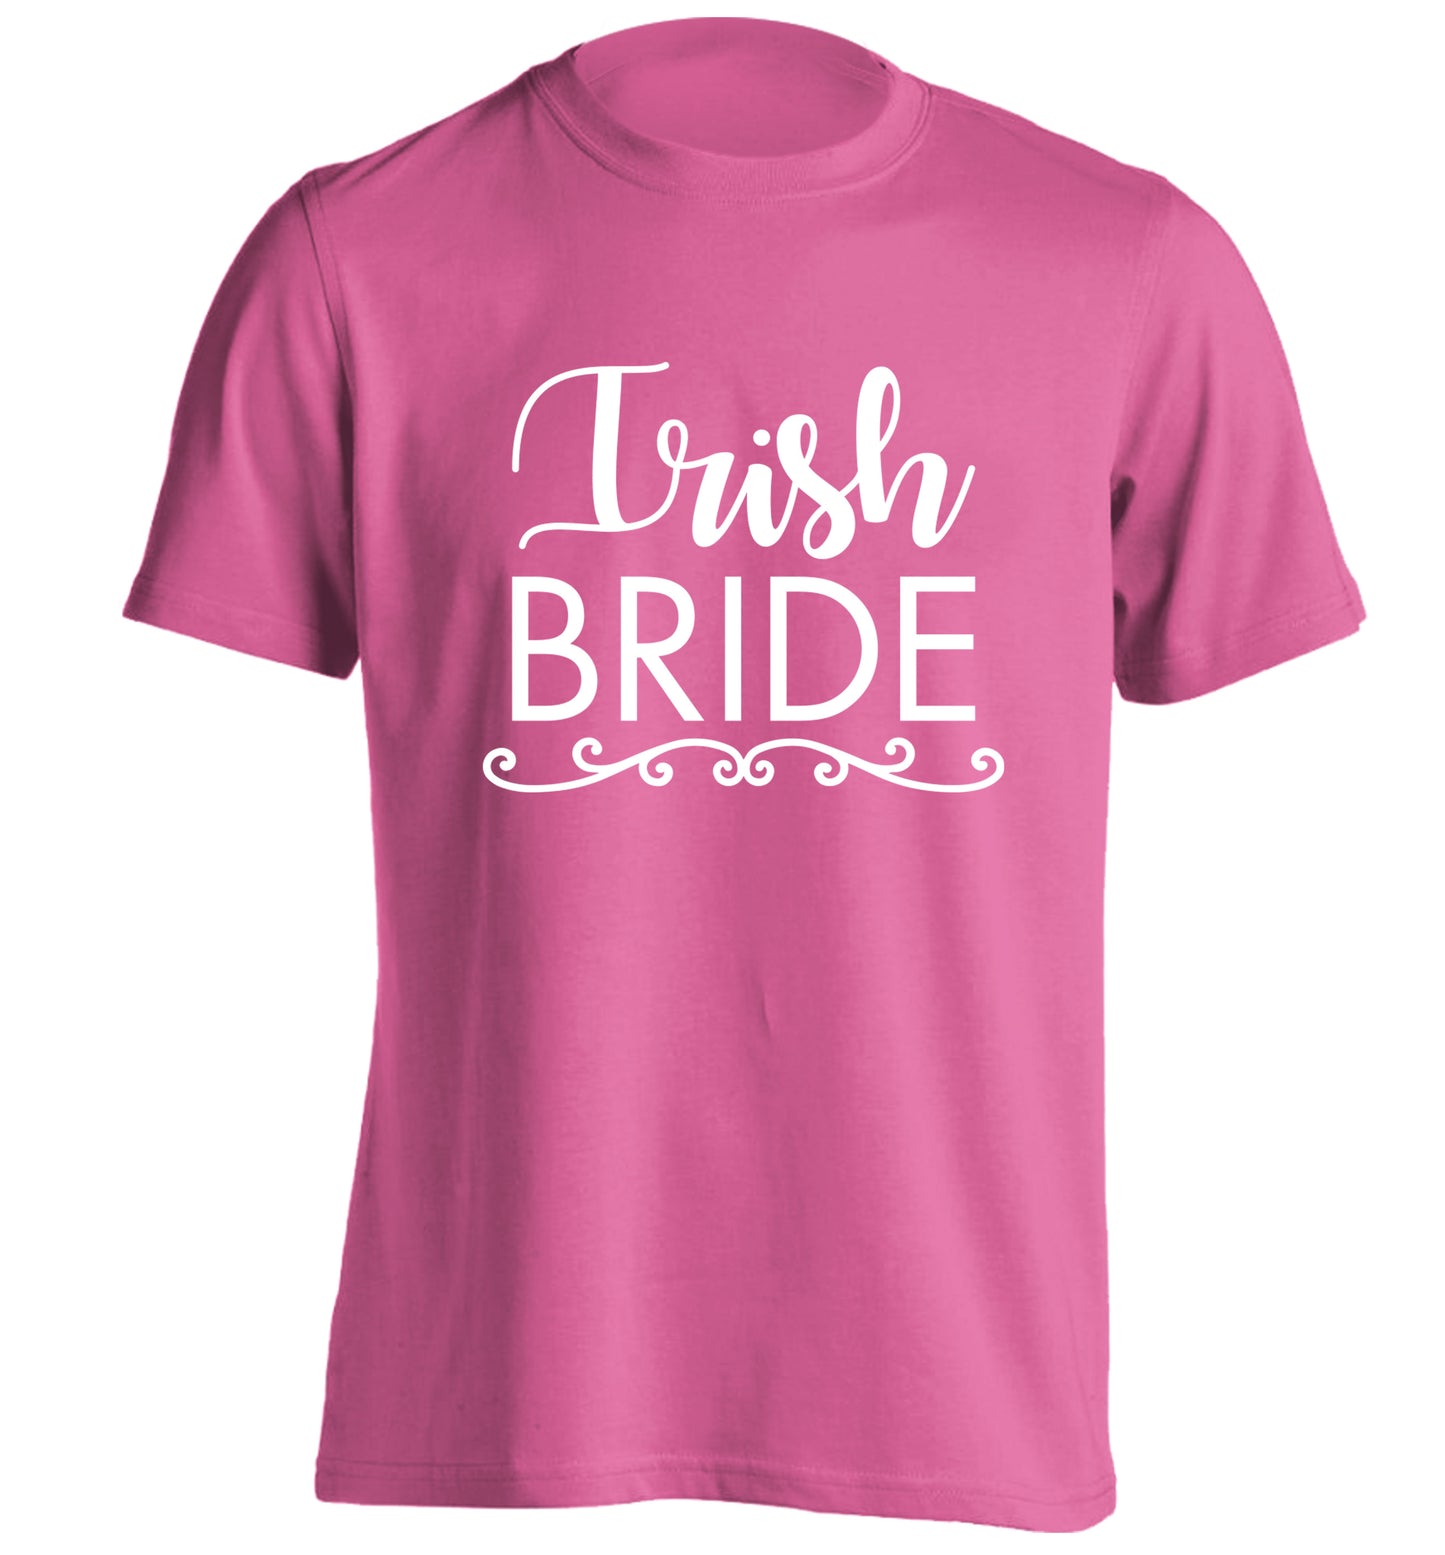 Irish bride adults unisex pink Tshirt 2XL